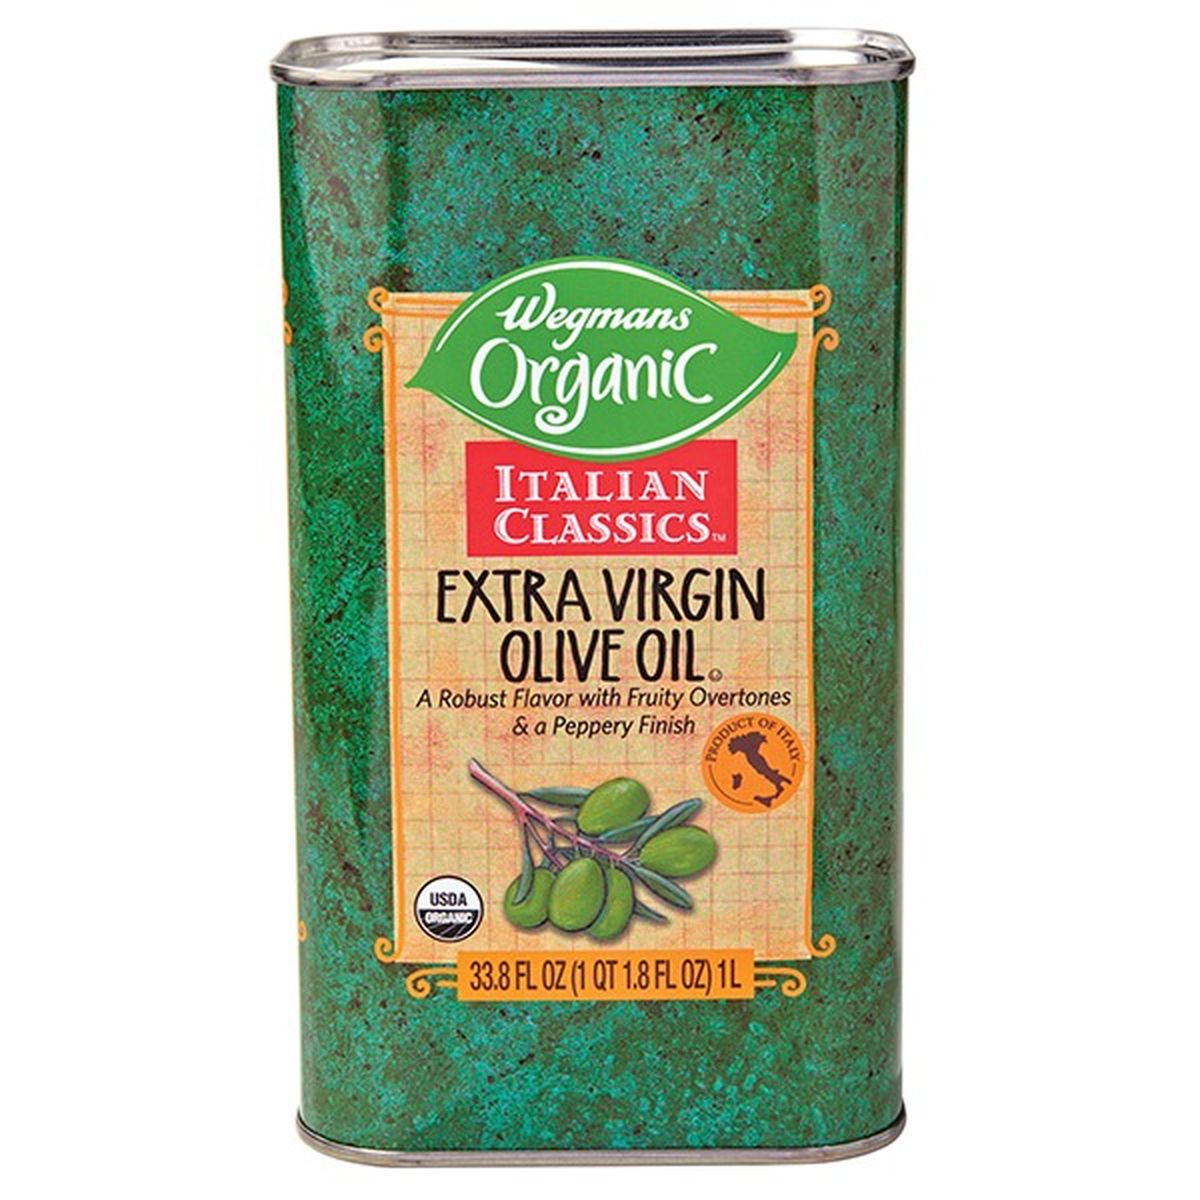 Calories in Wegmans Italian Classics Organic Extra Virgin Olive Oil